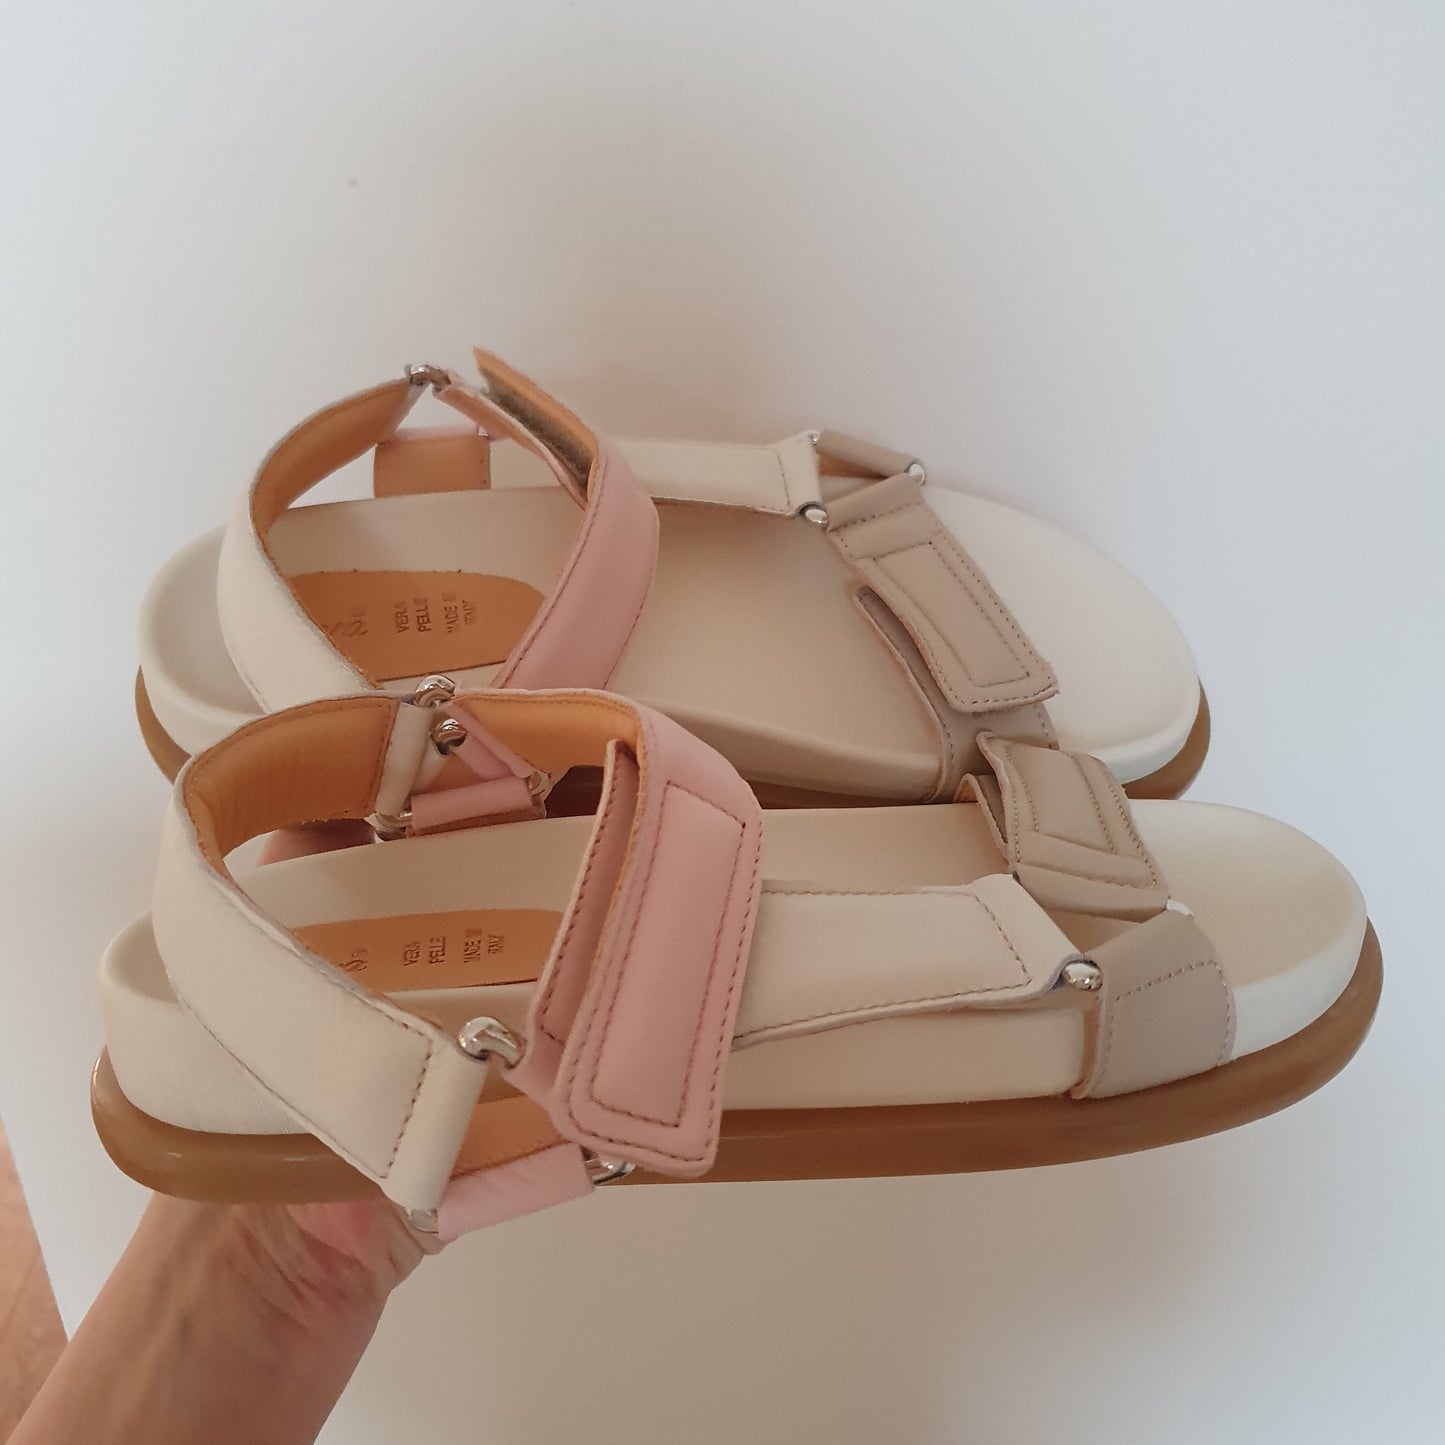 OCRA - dames sandaal - guantino/crema